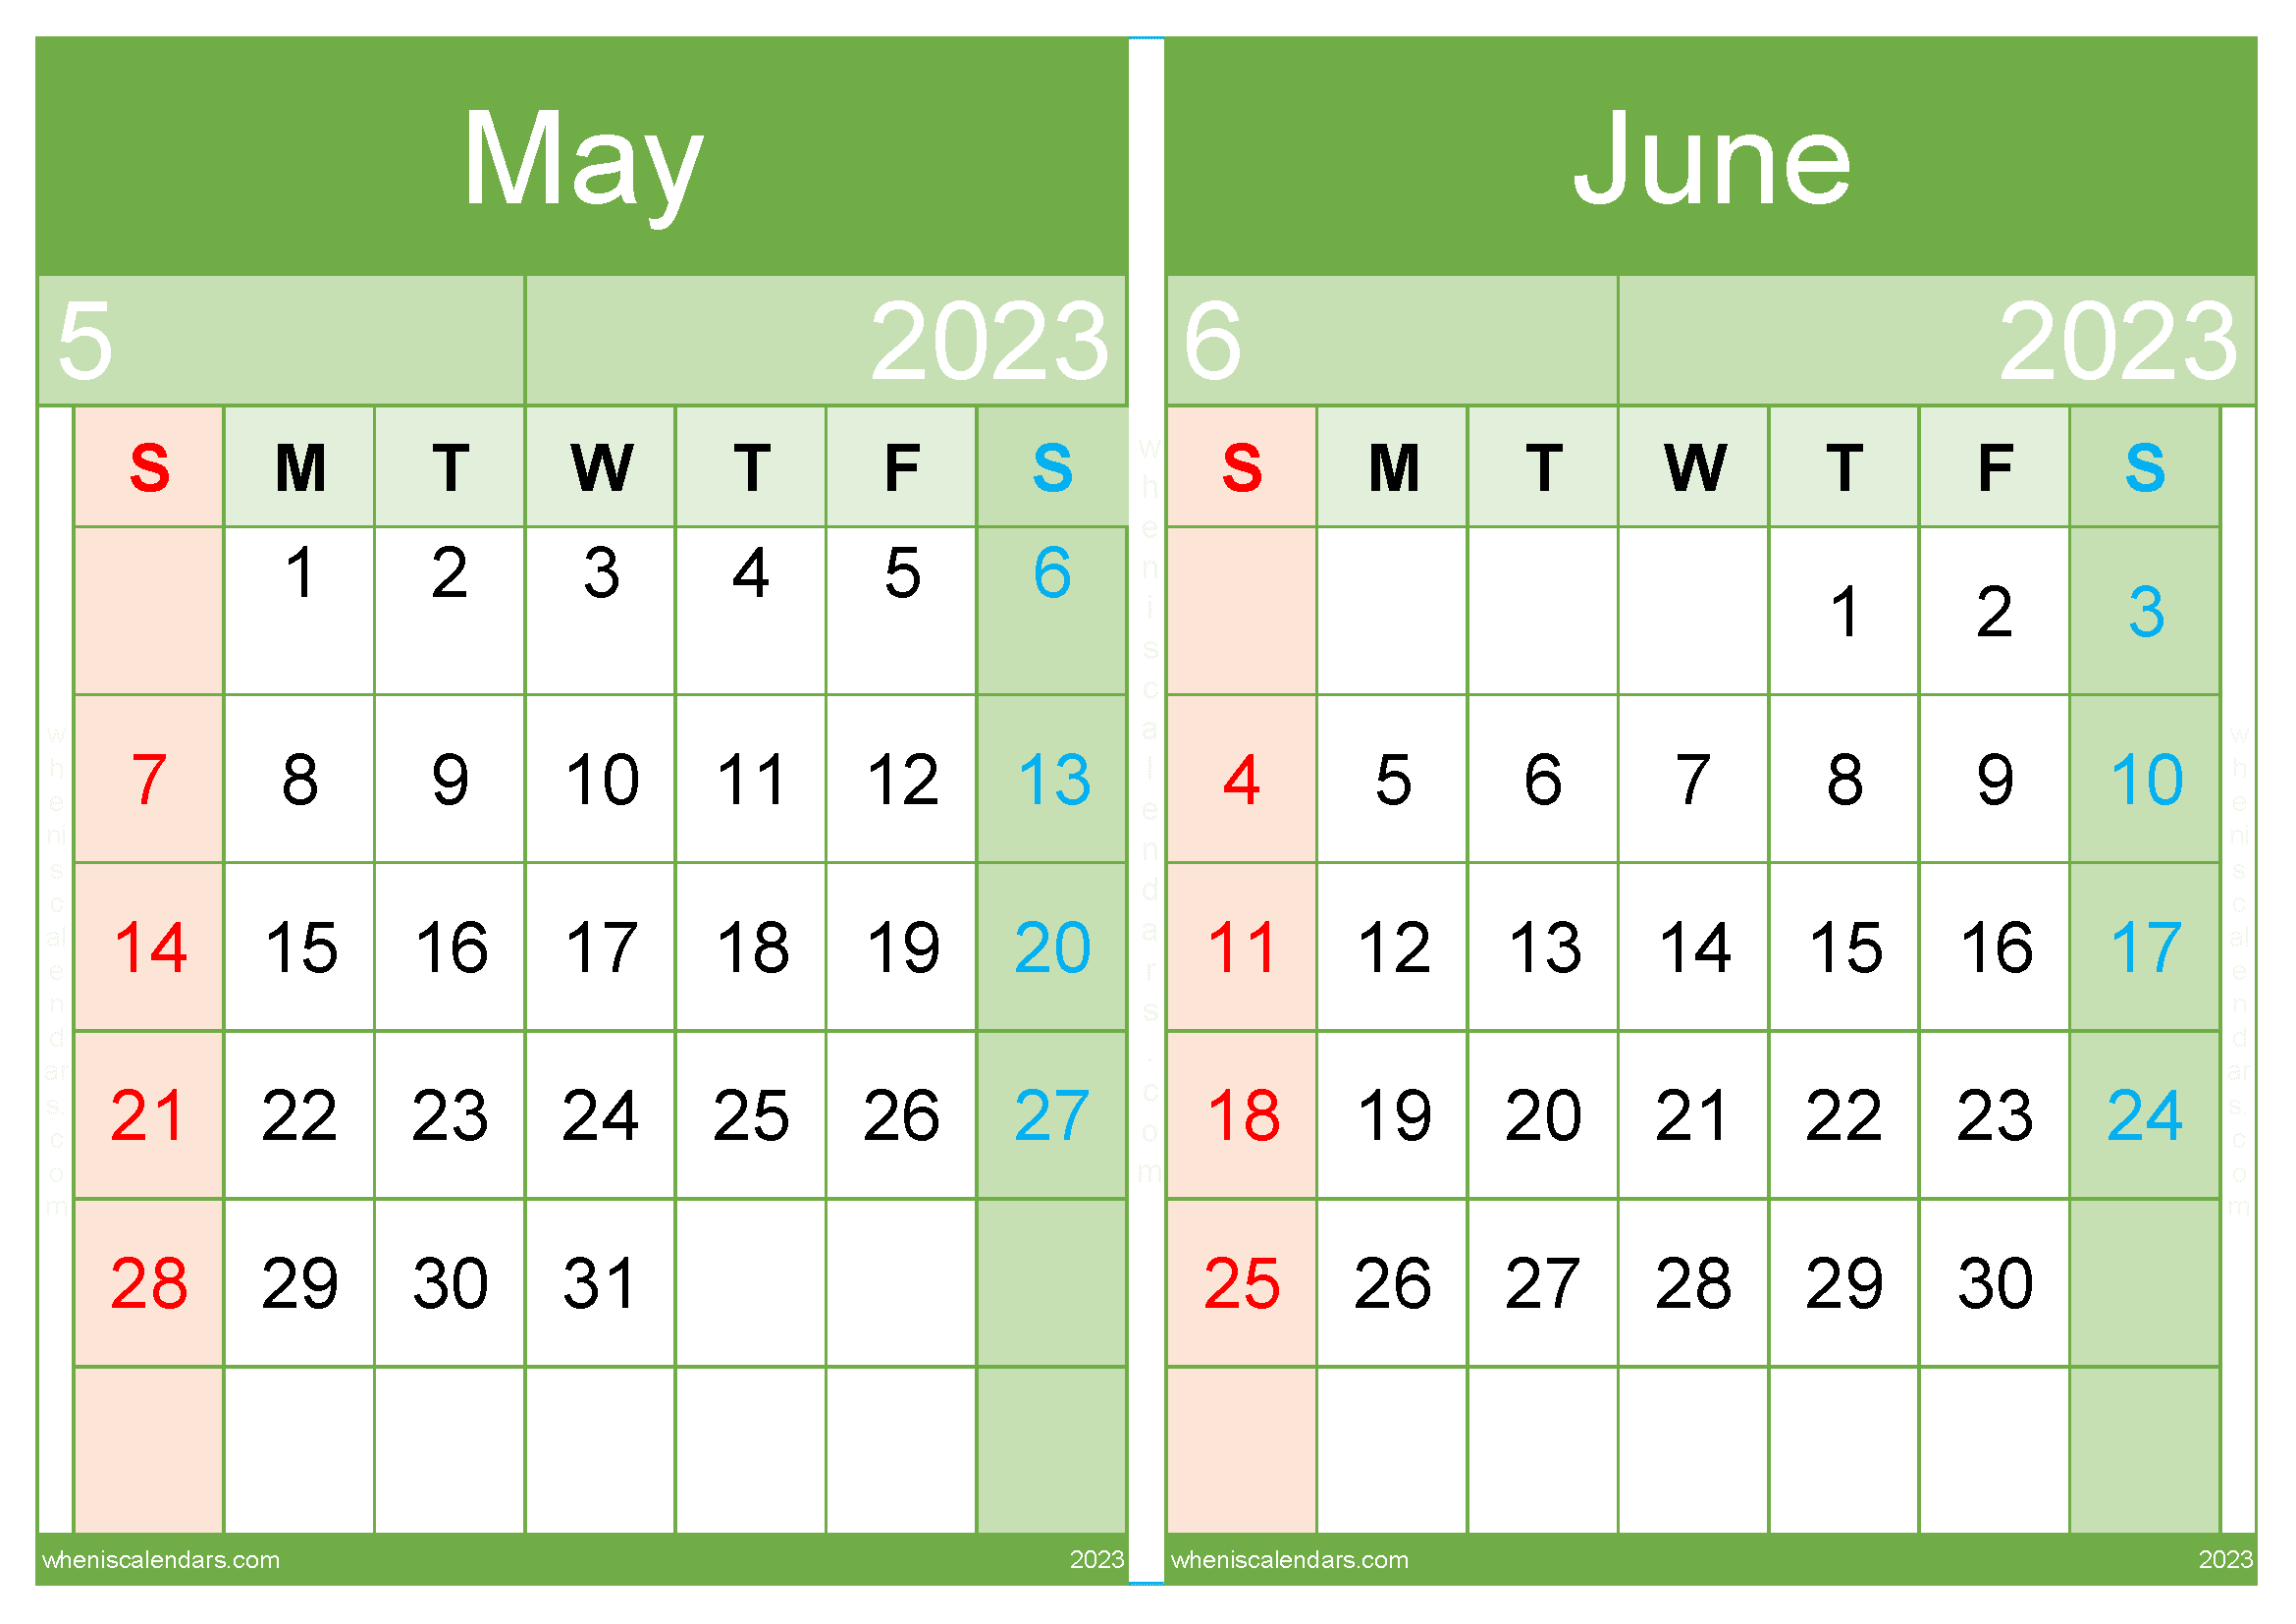 May and June Calendar 2023 Template (MJ2318)